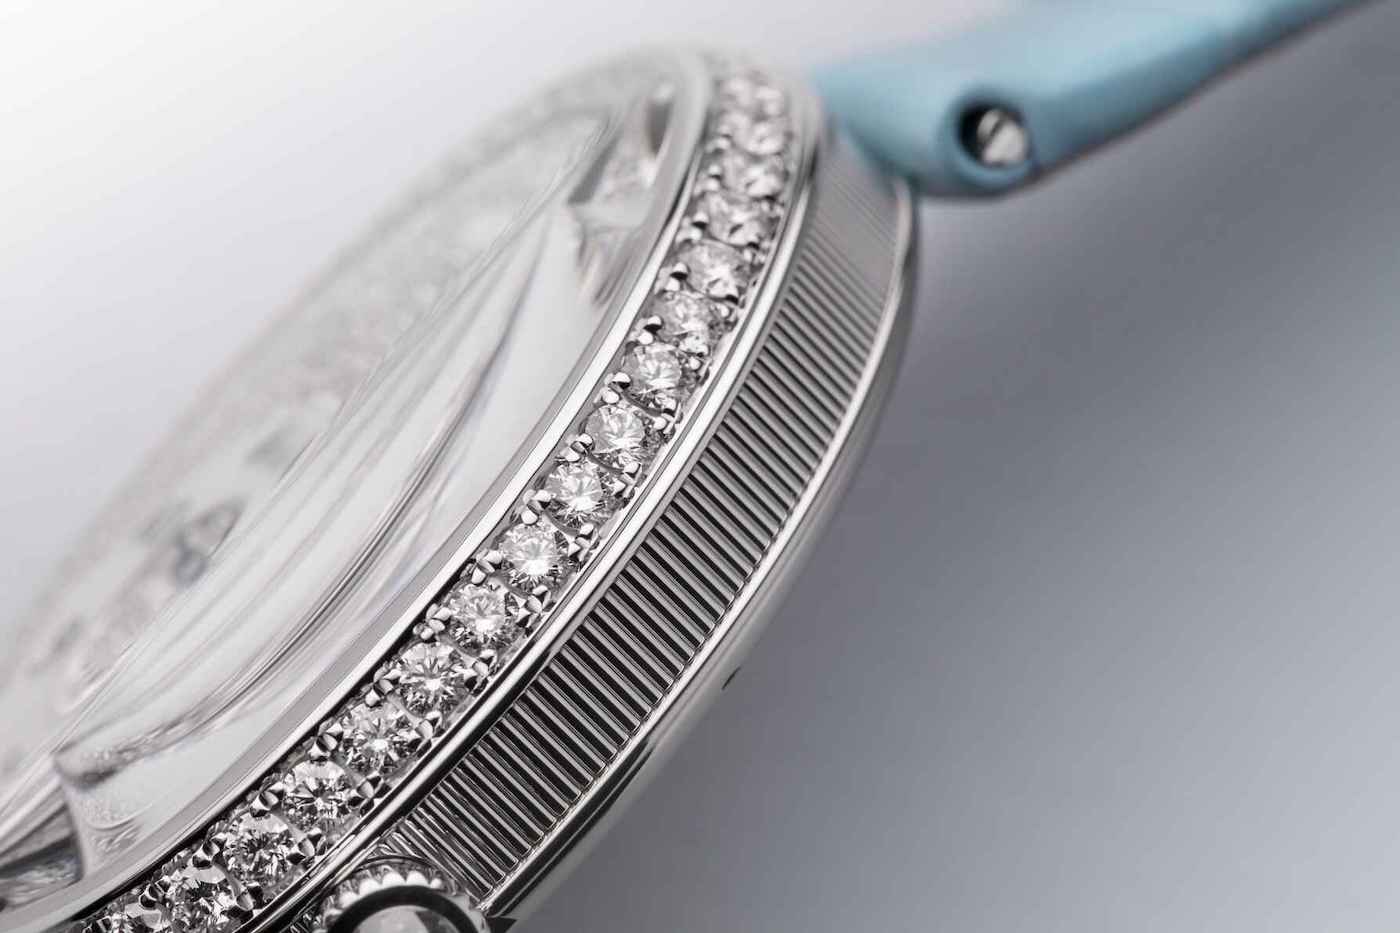 Breguet unveils its new diamond-set Reine de Naples 8938